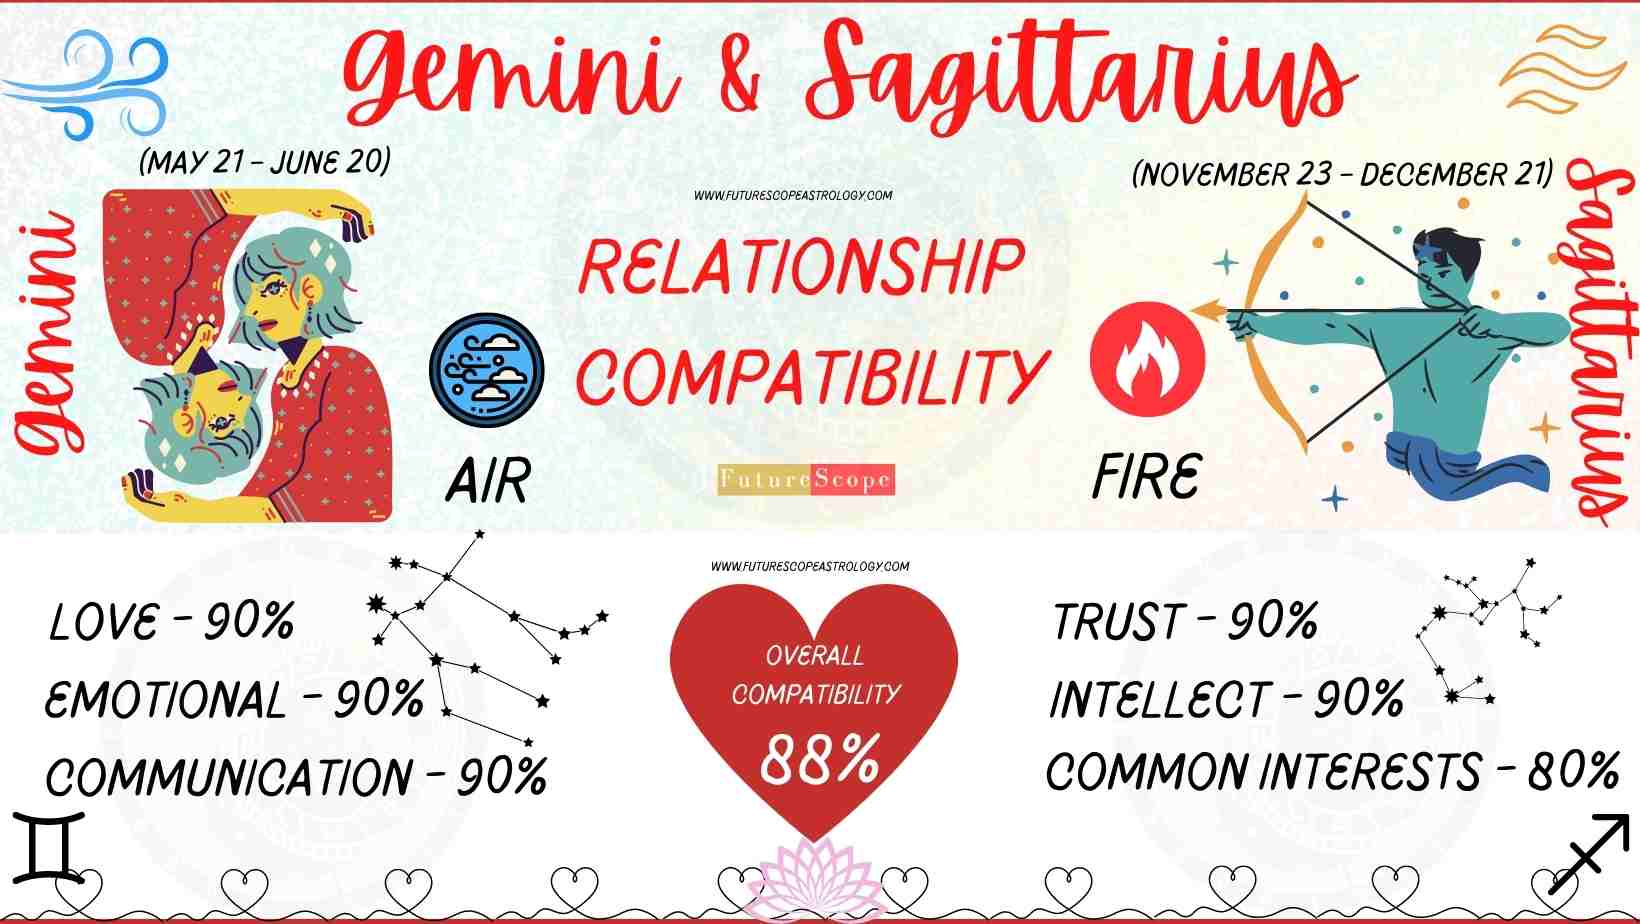 sag and gemini compatibility